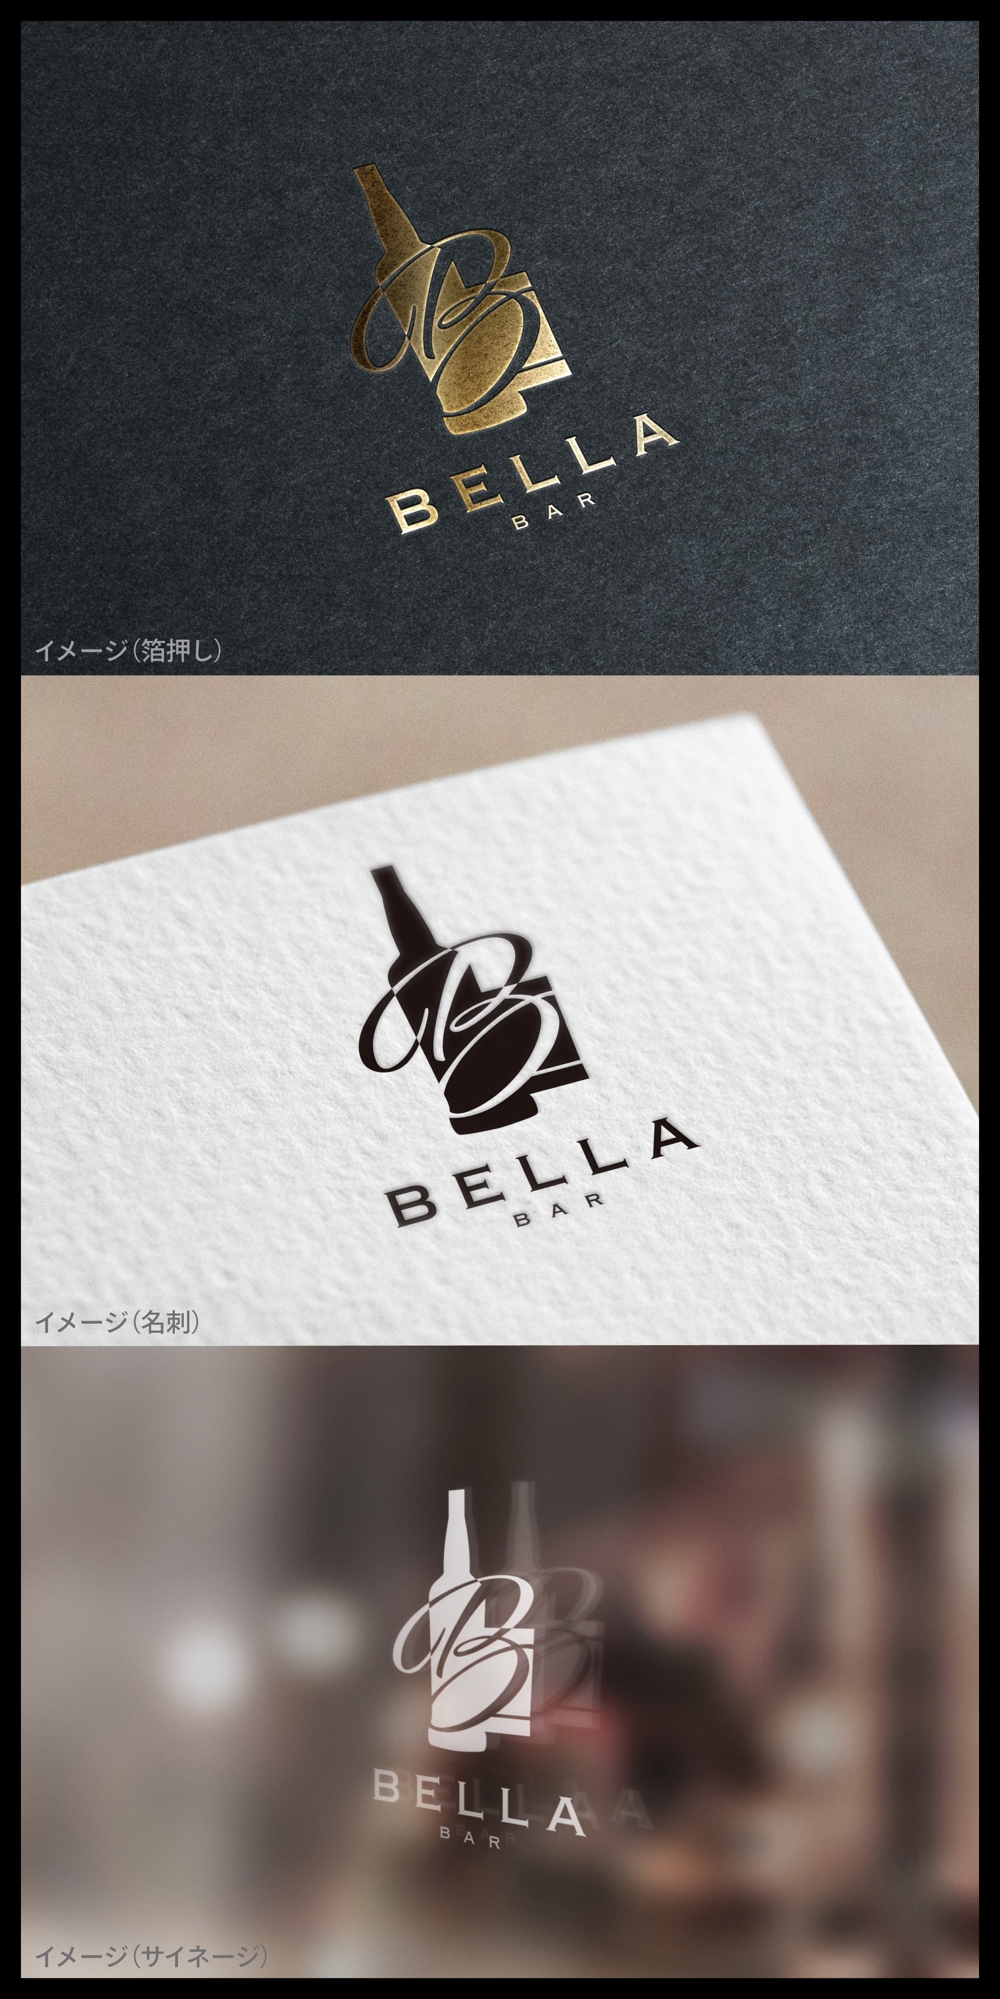 bar bella_logo01_01.jpg